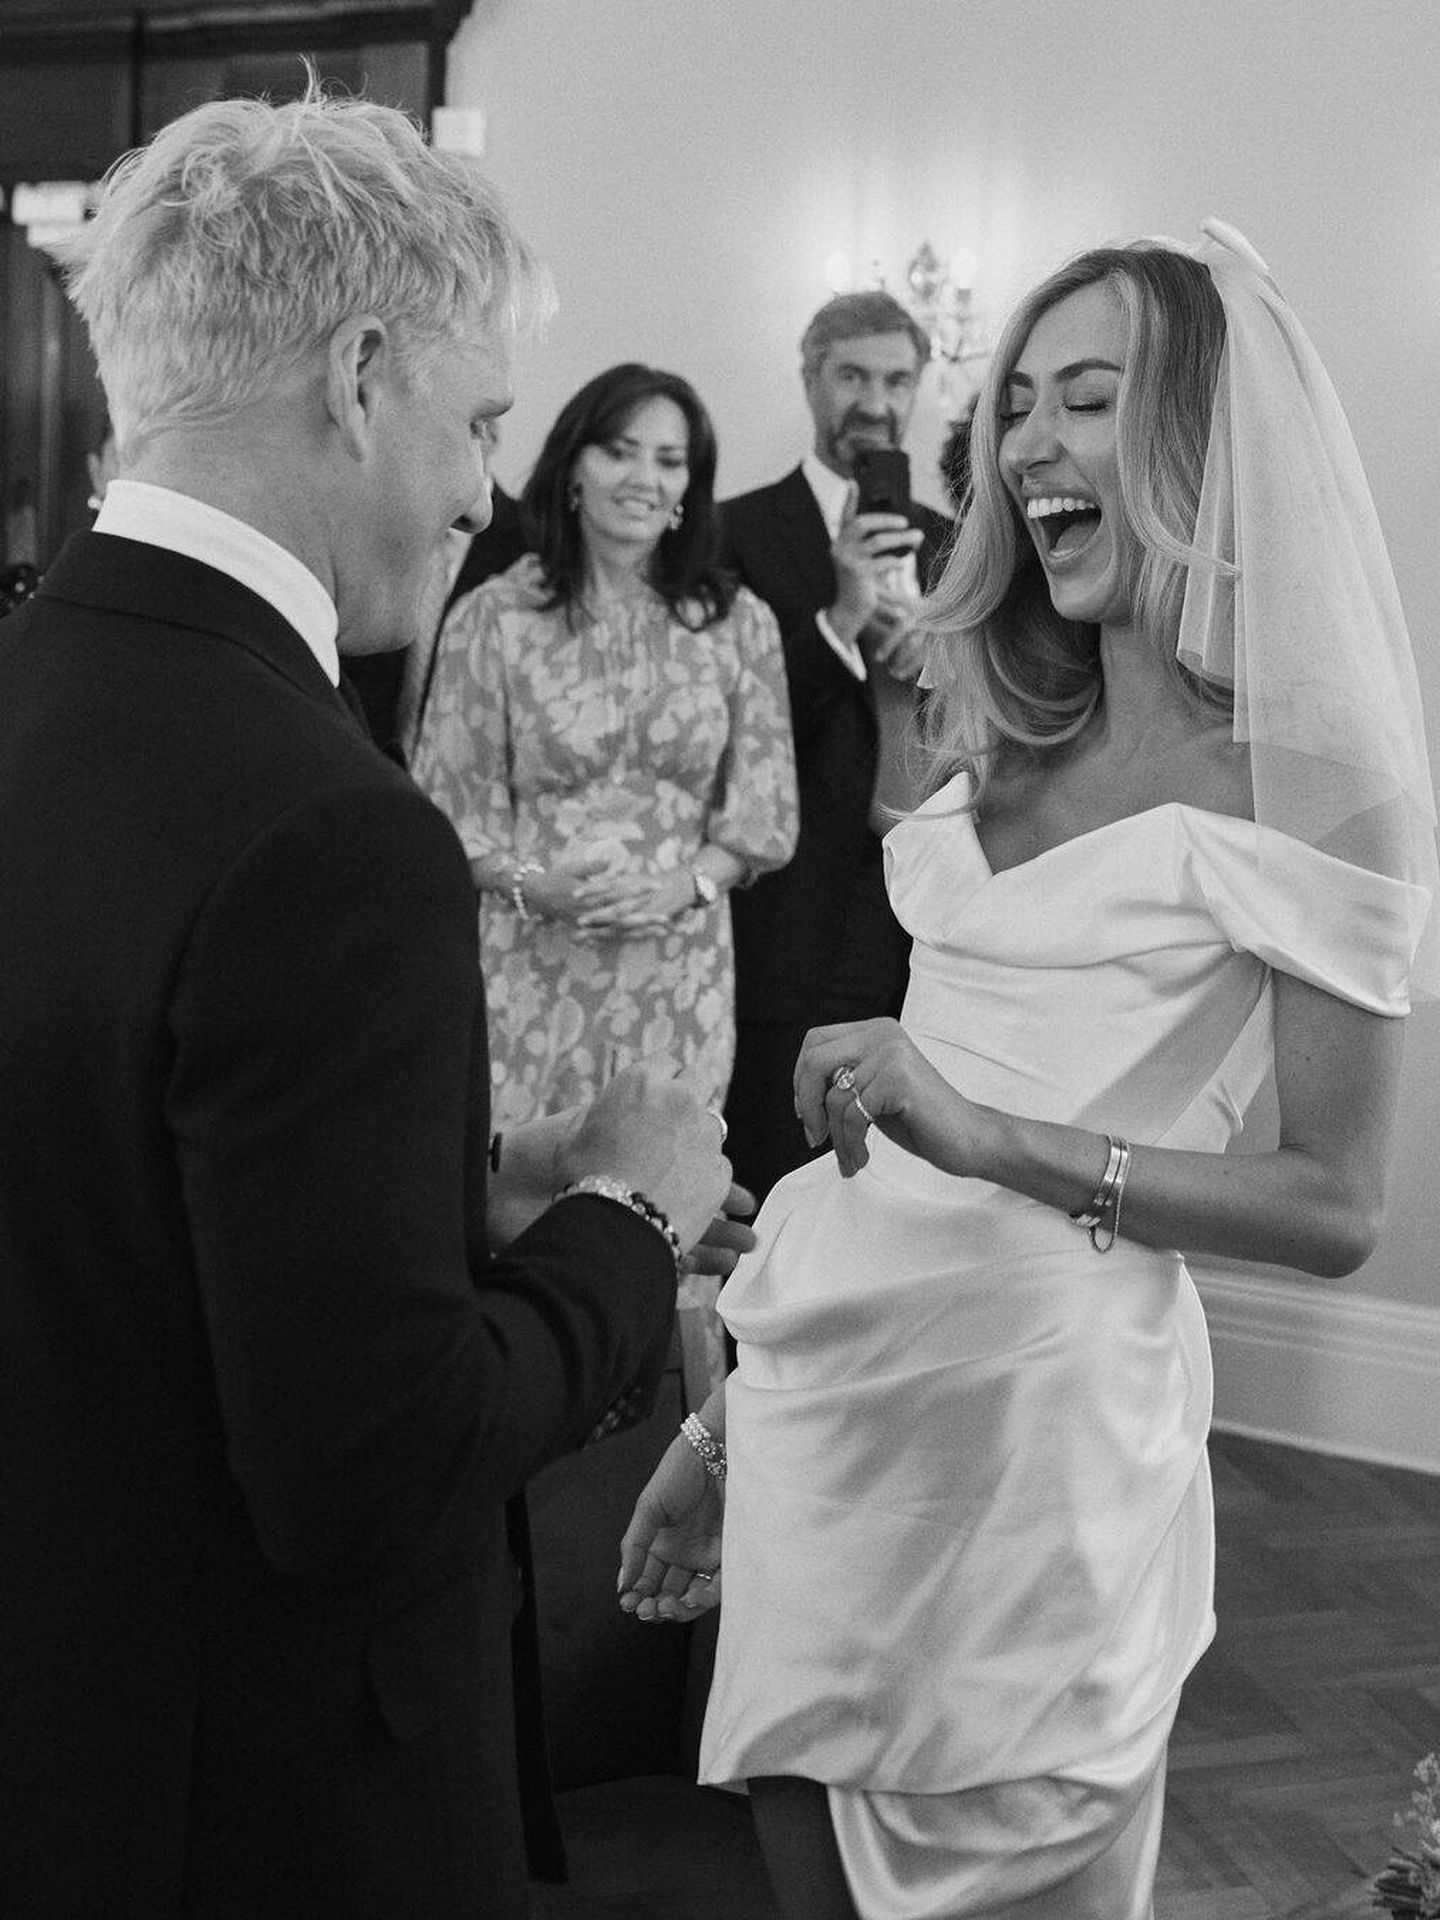 La boda de Jamie y Sophie. (Instagram/@benjaminwheeler)